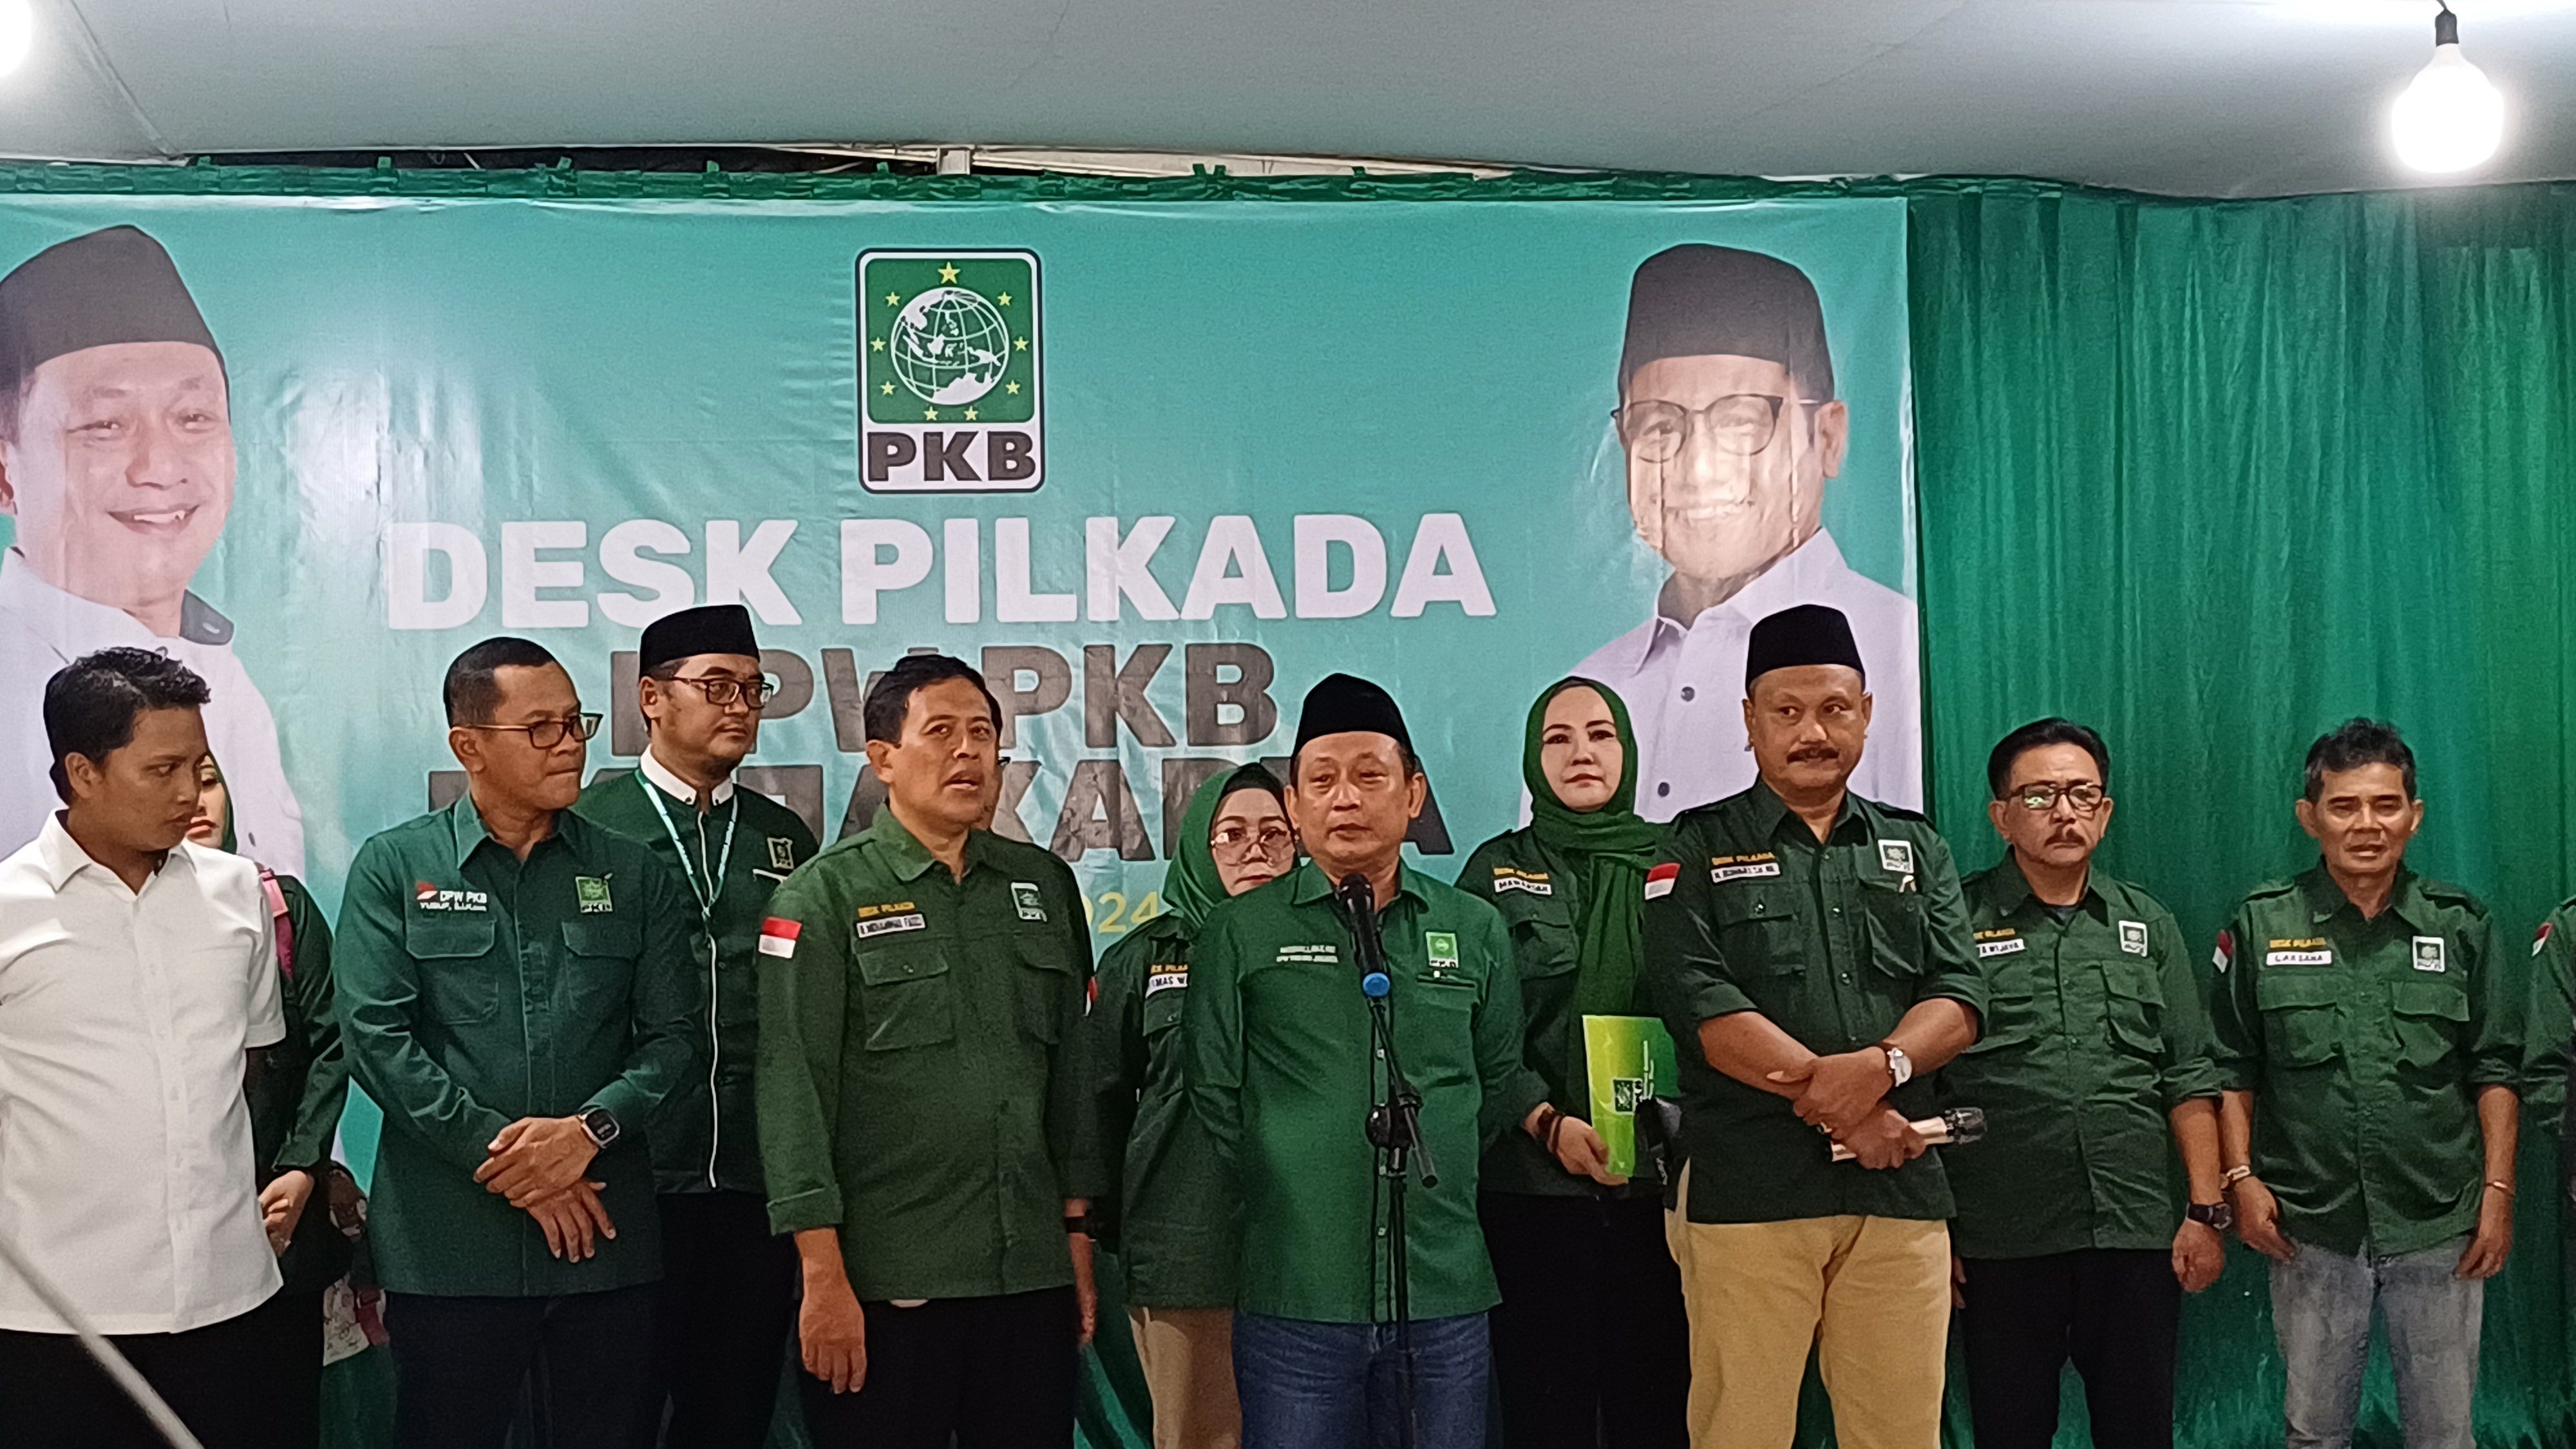 Manuver PKB pada Pilkada Jakarta: 2017 Dukung Ahok, 2024 Dukung Anies